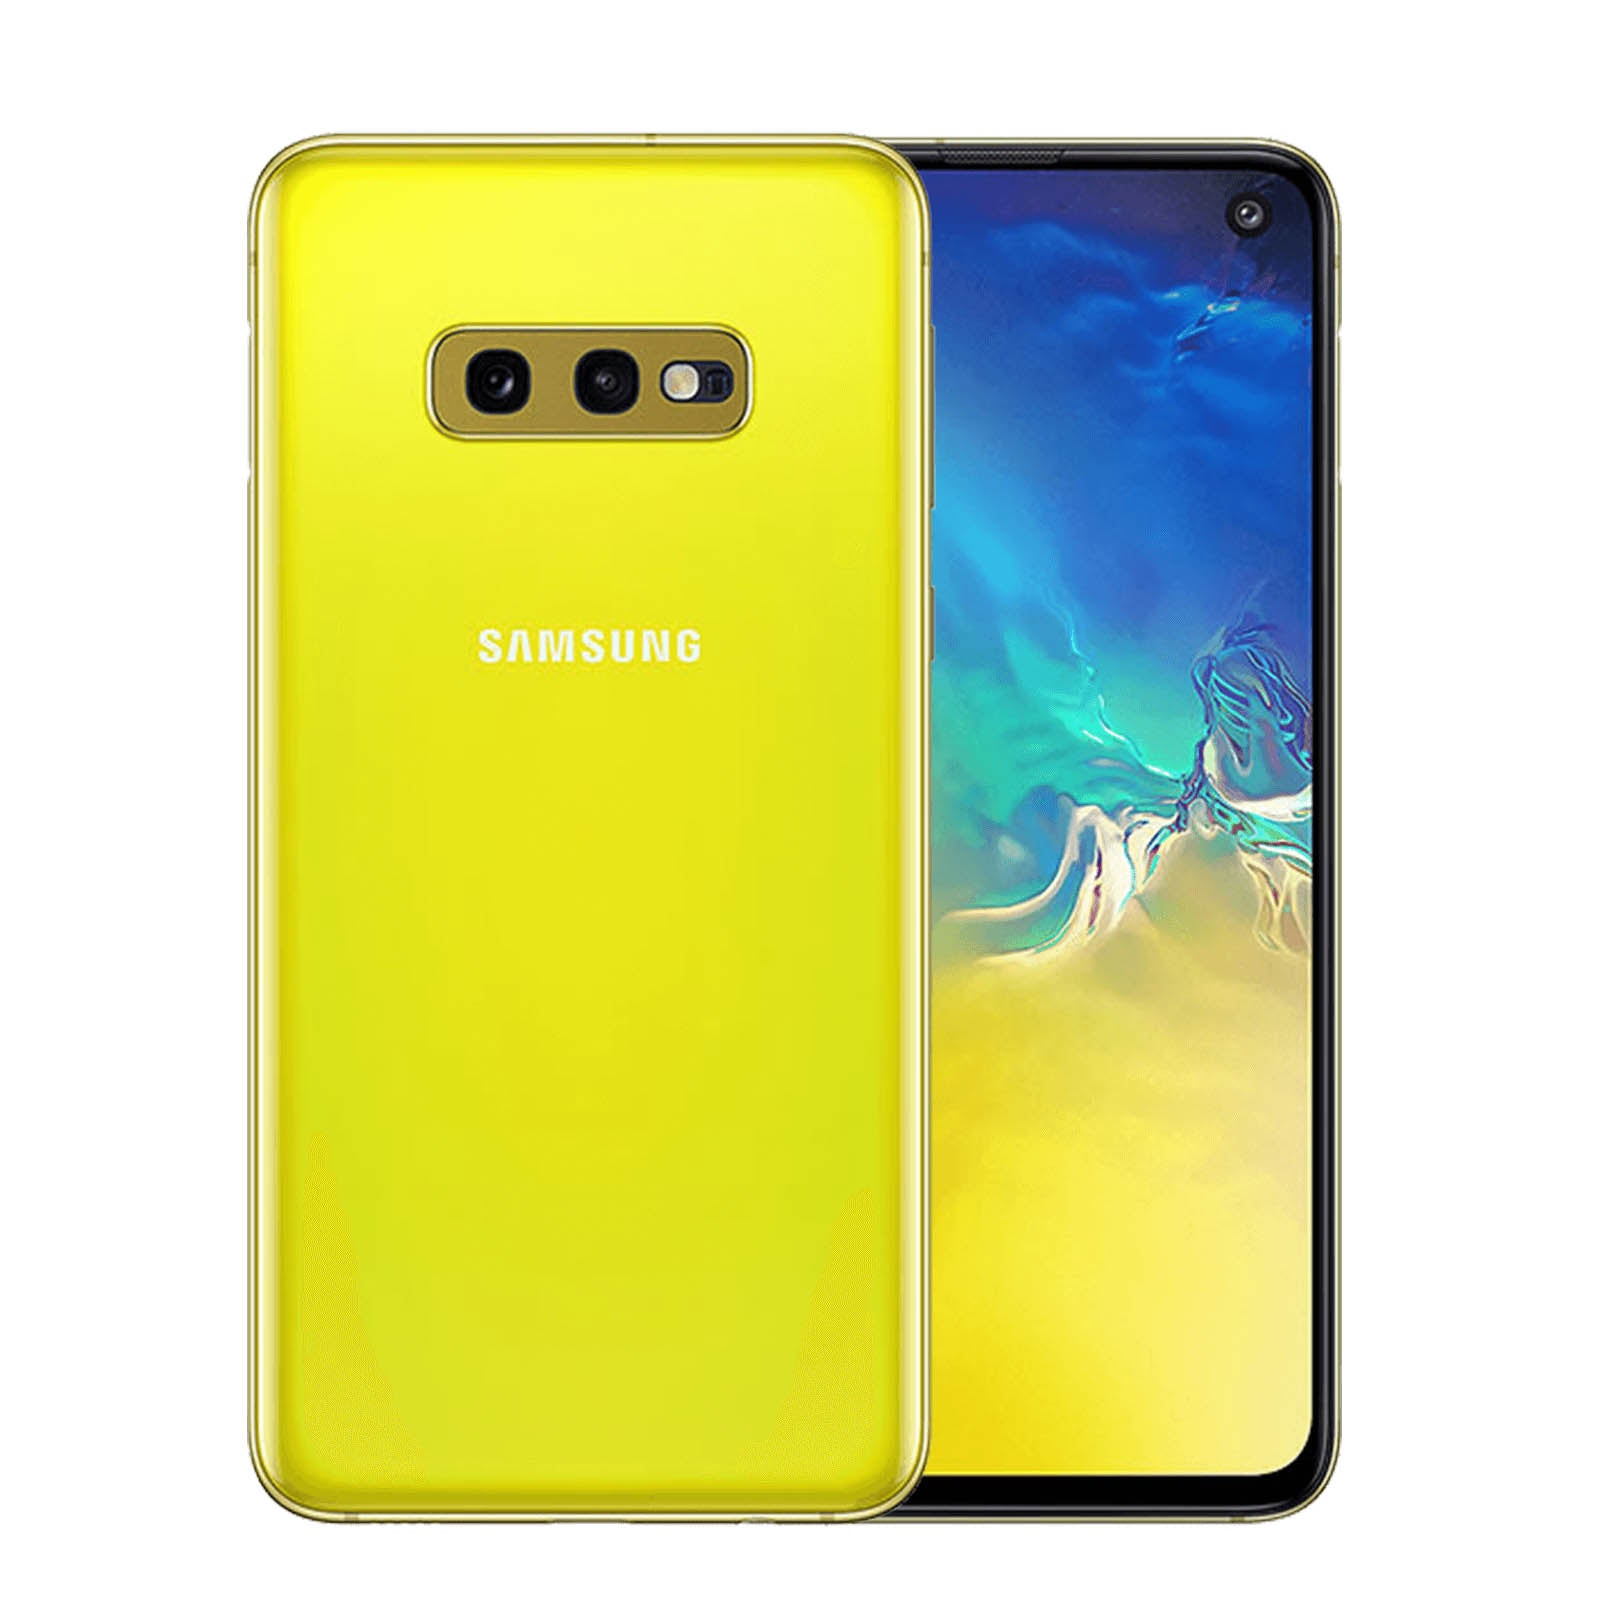 Samsung Galaxy S10E 128GB Yellow Good - Unlocked